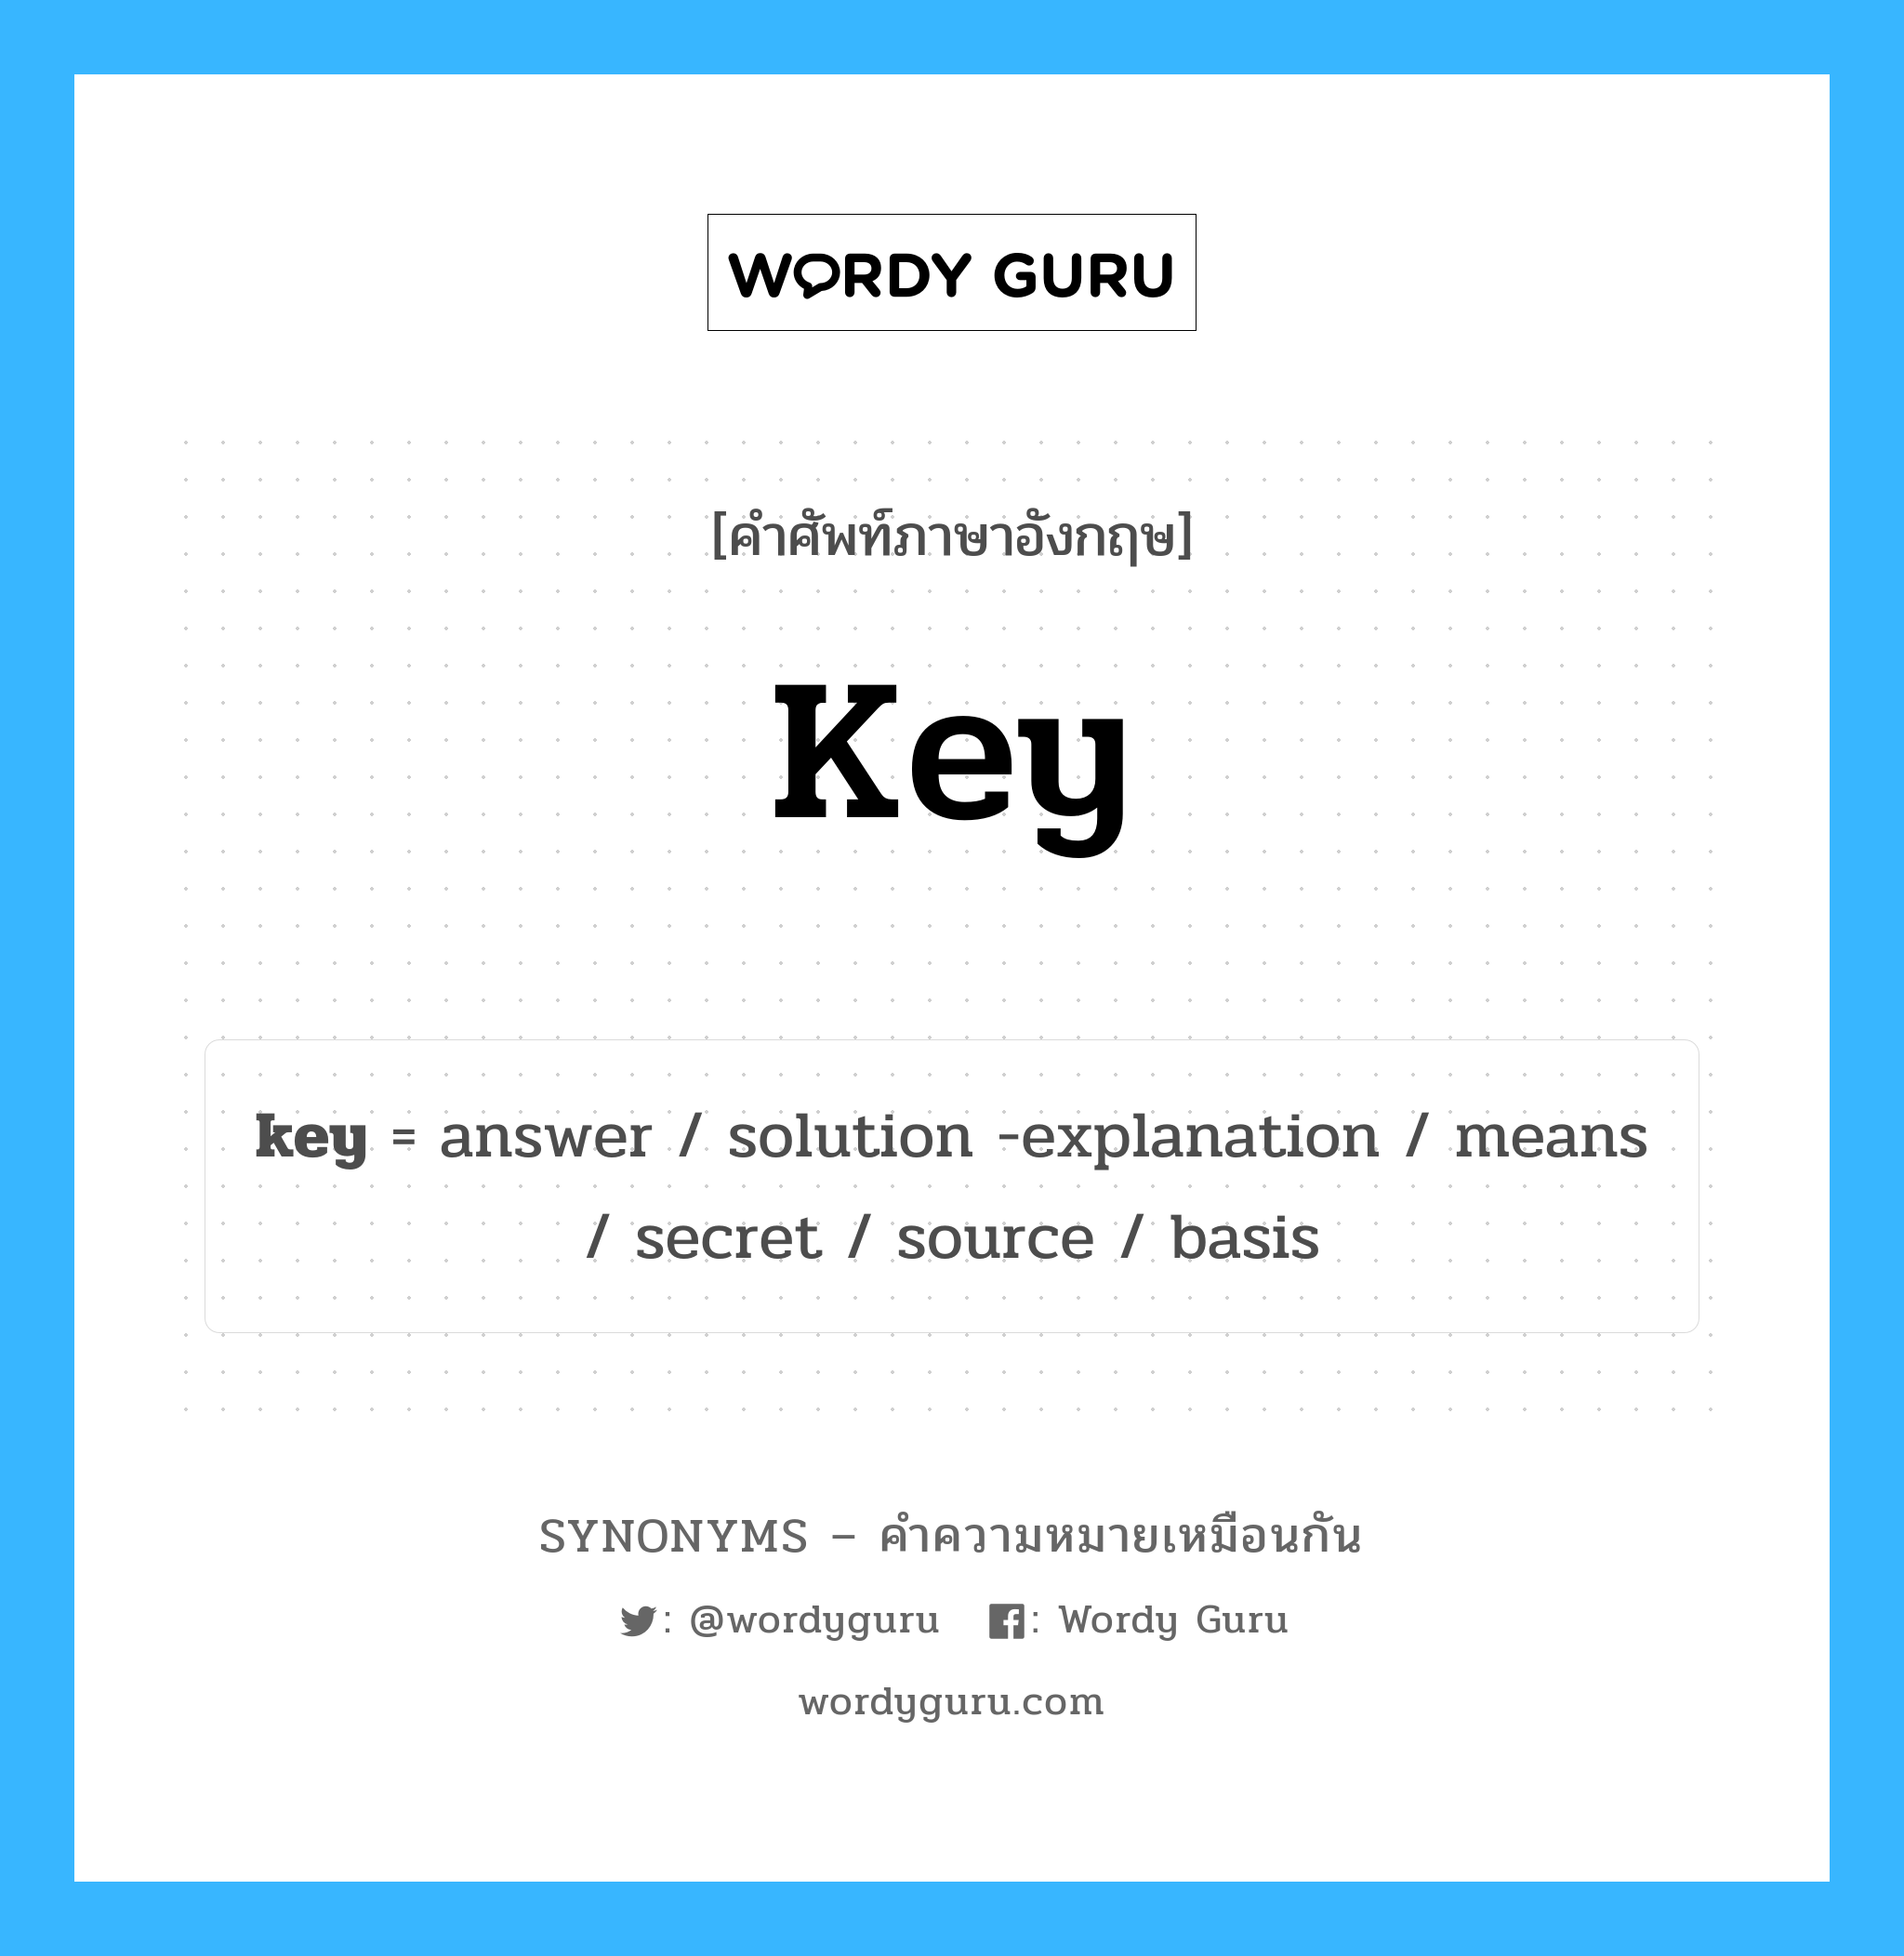 basis เป็นหนึ่งใน key และมีคำอื่น ๆ อีกดังนี้, คำศัพท์ภาษาอังกฤษ basis ความหมายคล้ายกันกับ key แปลว่า ข้อมูลพื้นฐาน หมวด key